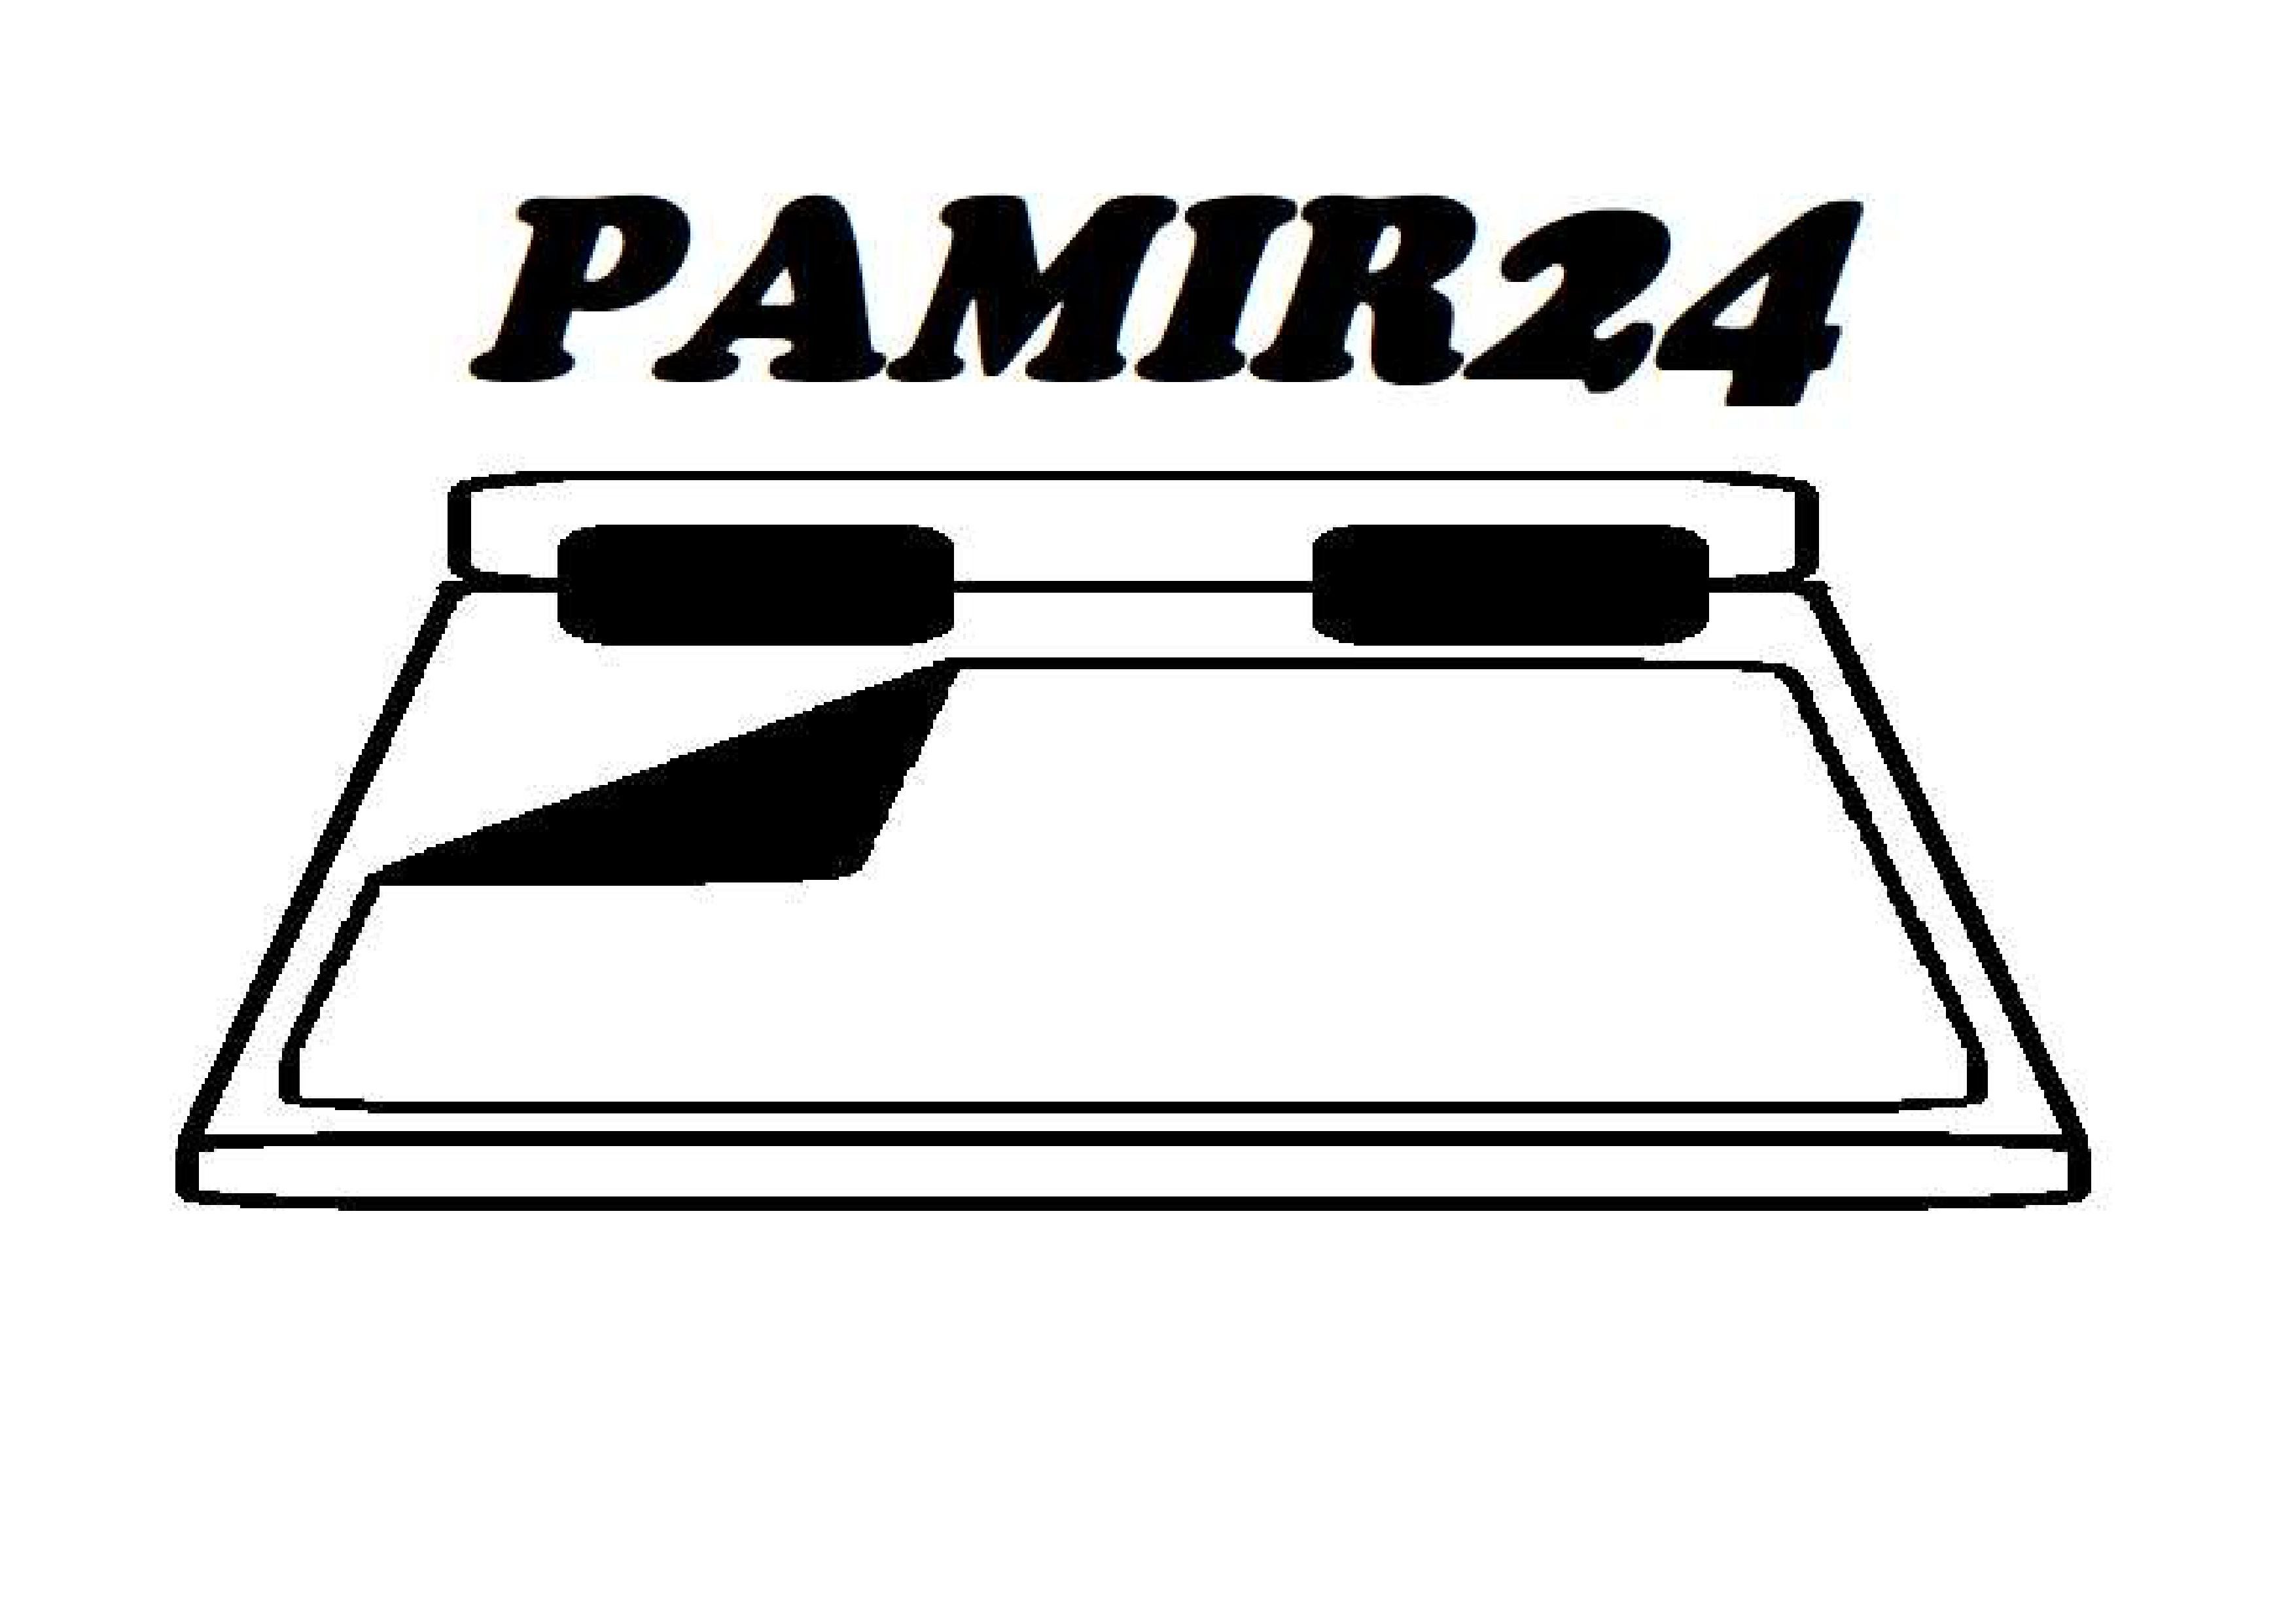 PAMIR24